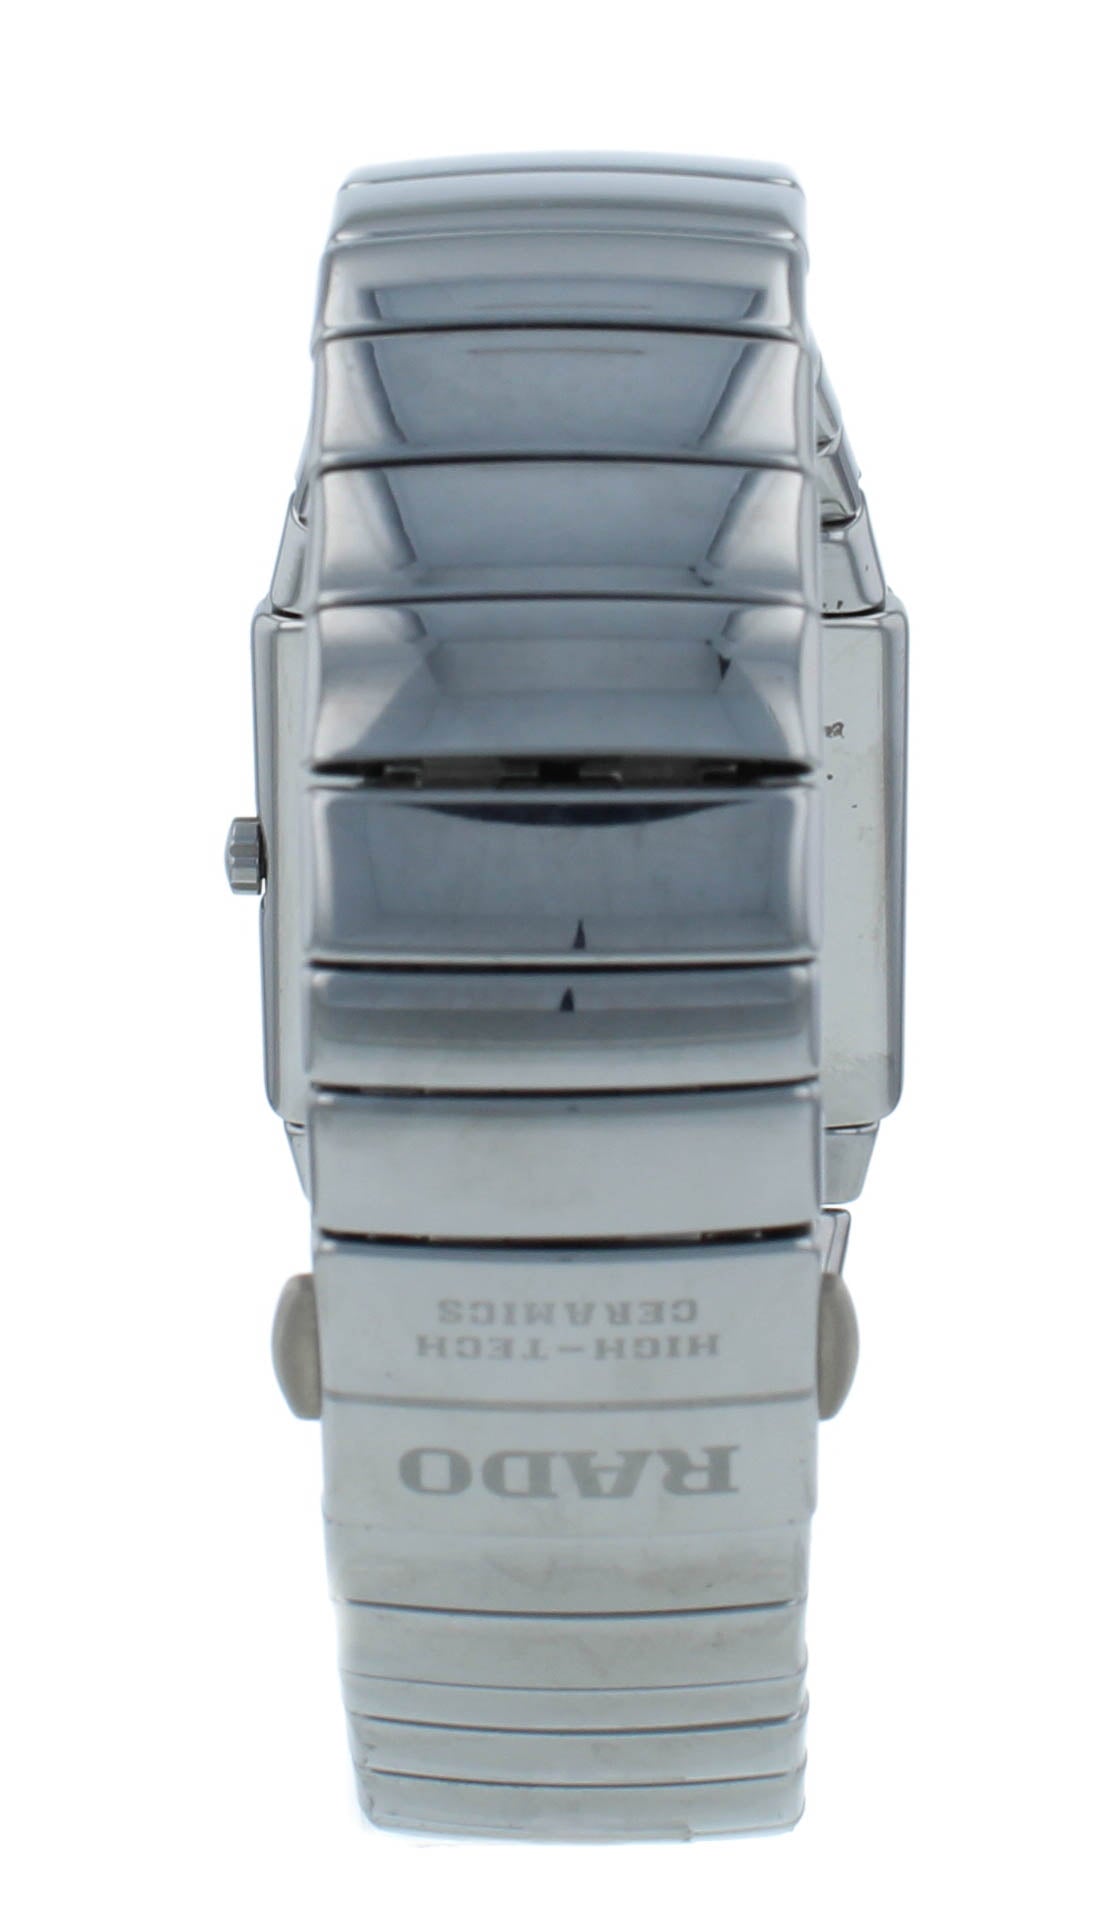 Rado Sintra White Dial 39X29mm Quartz Ceramic Unisex Watch R13332142